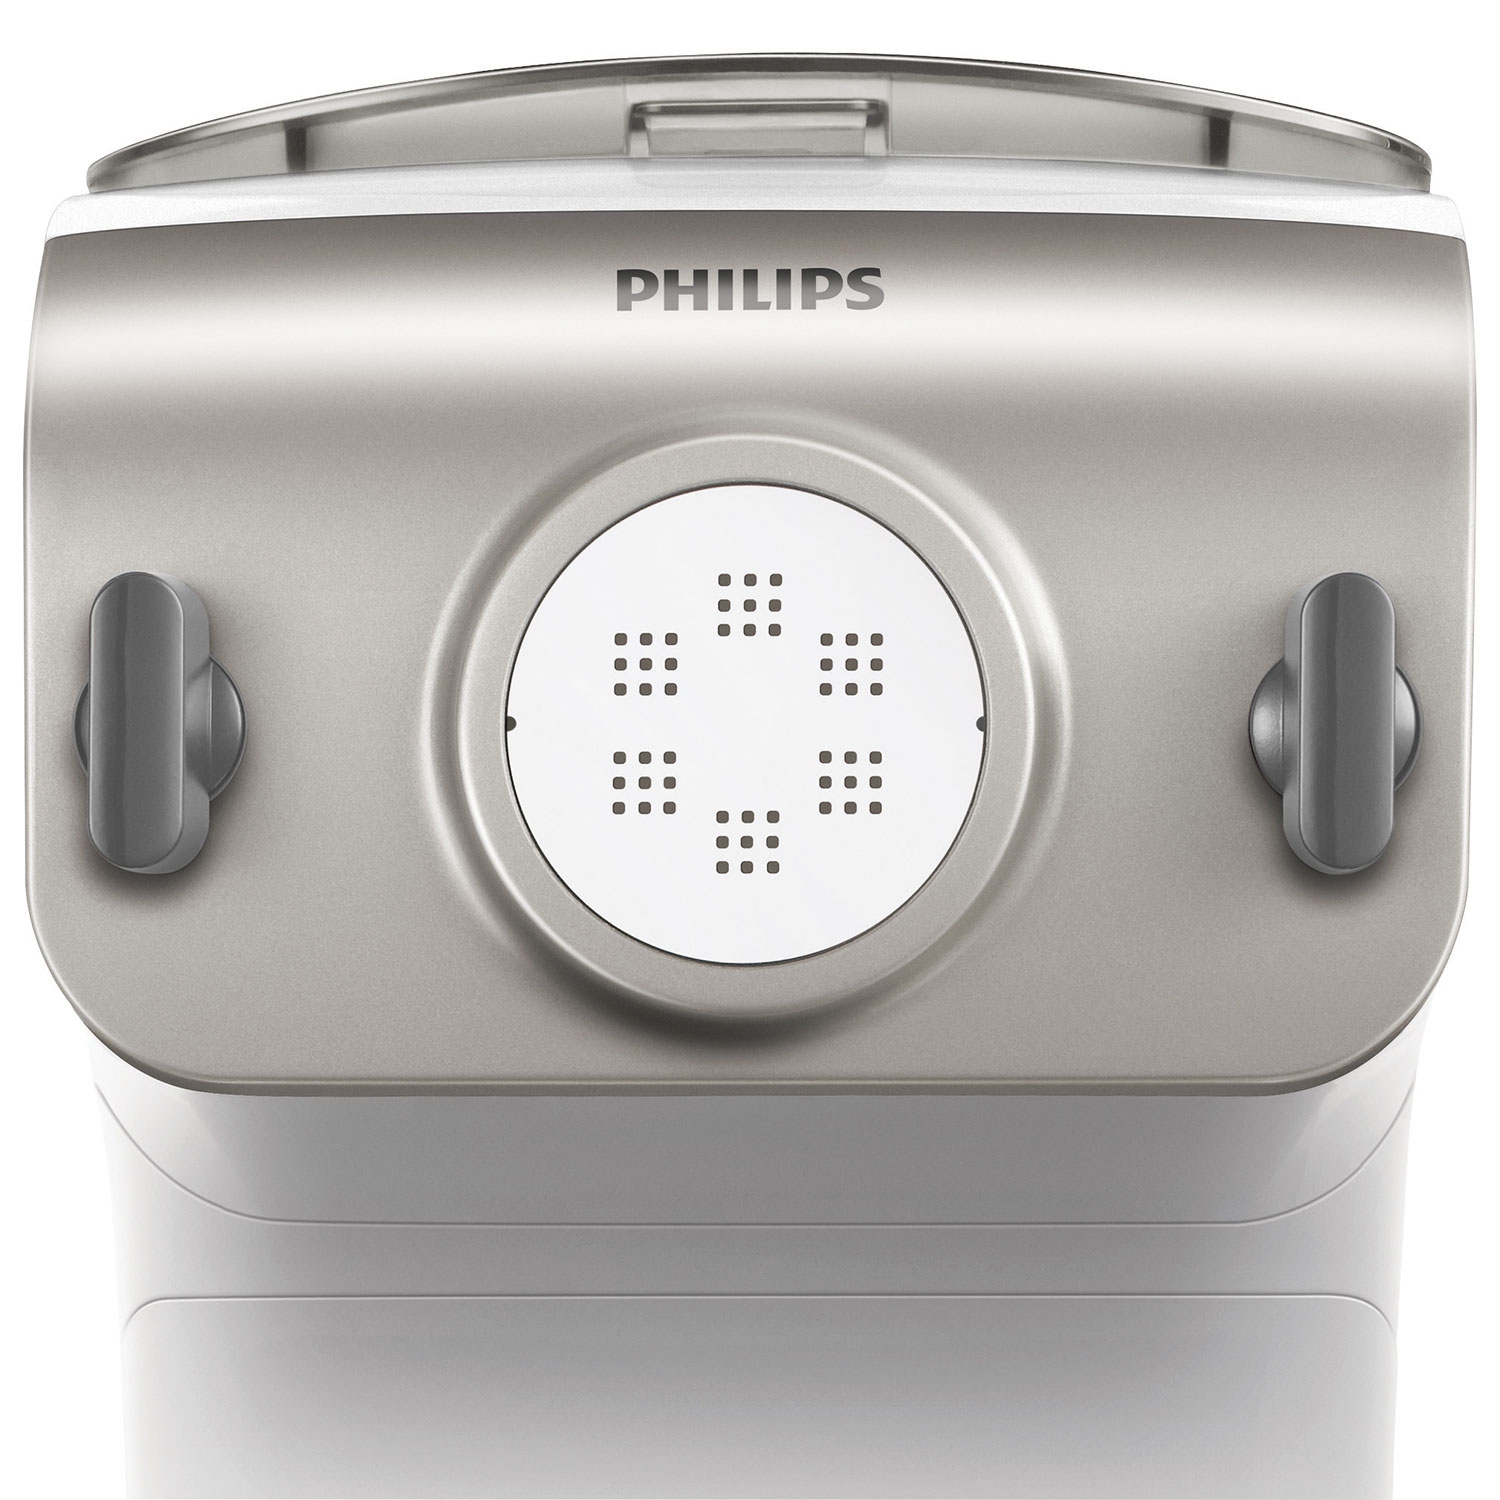 Philips где купить. Philips hr2355. Паста-машина Philips. Паста машина Филипс. Паста-машина Philips Premium collection.